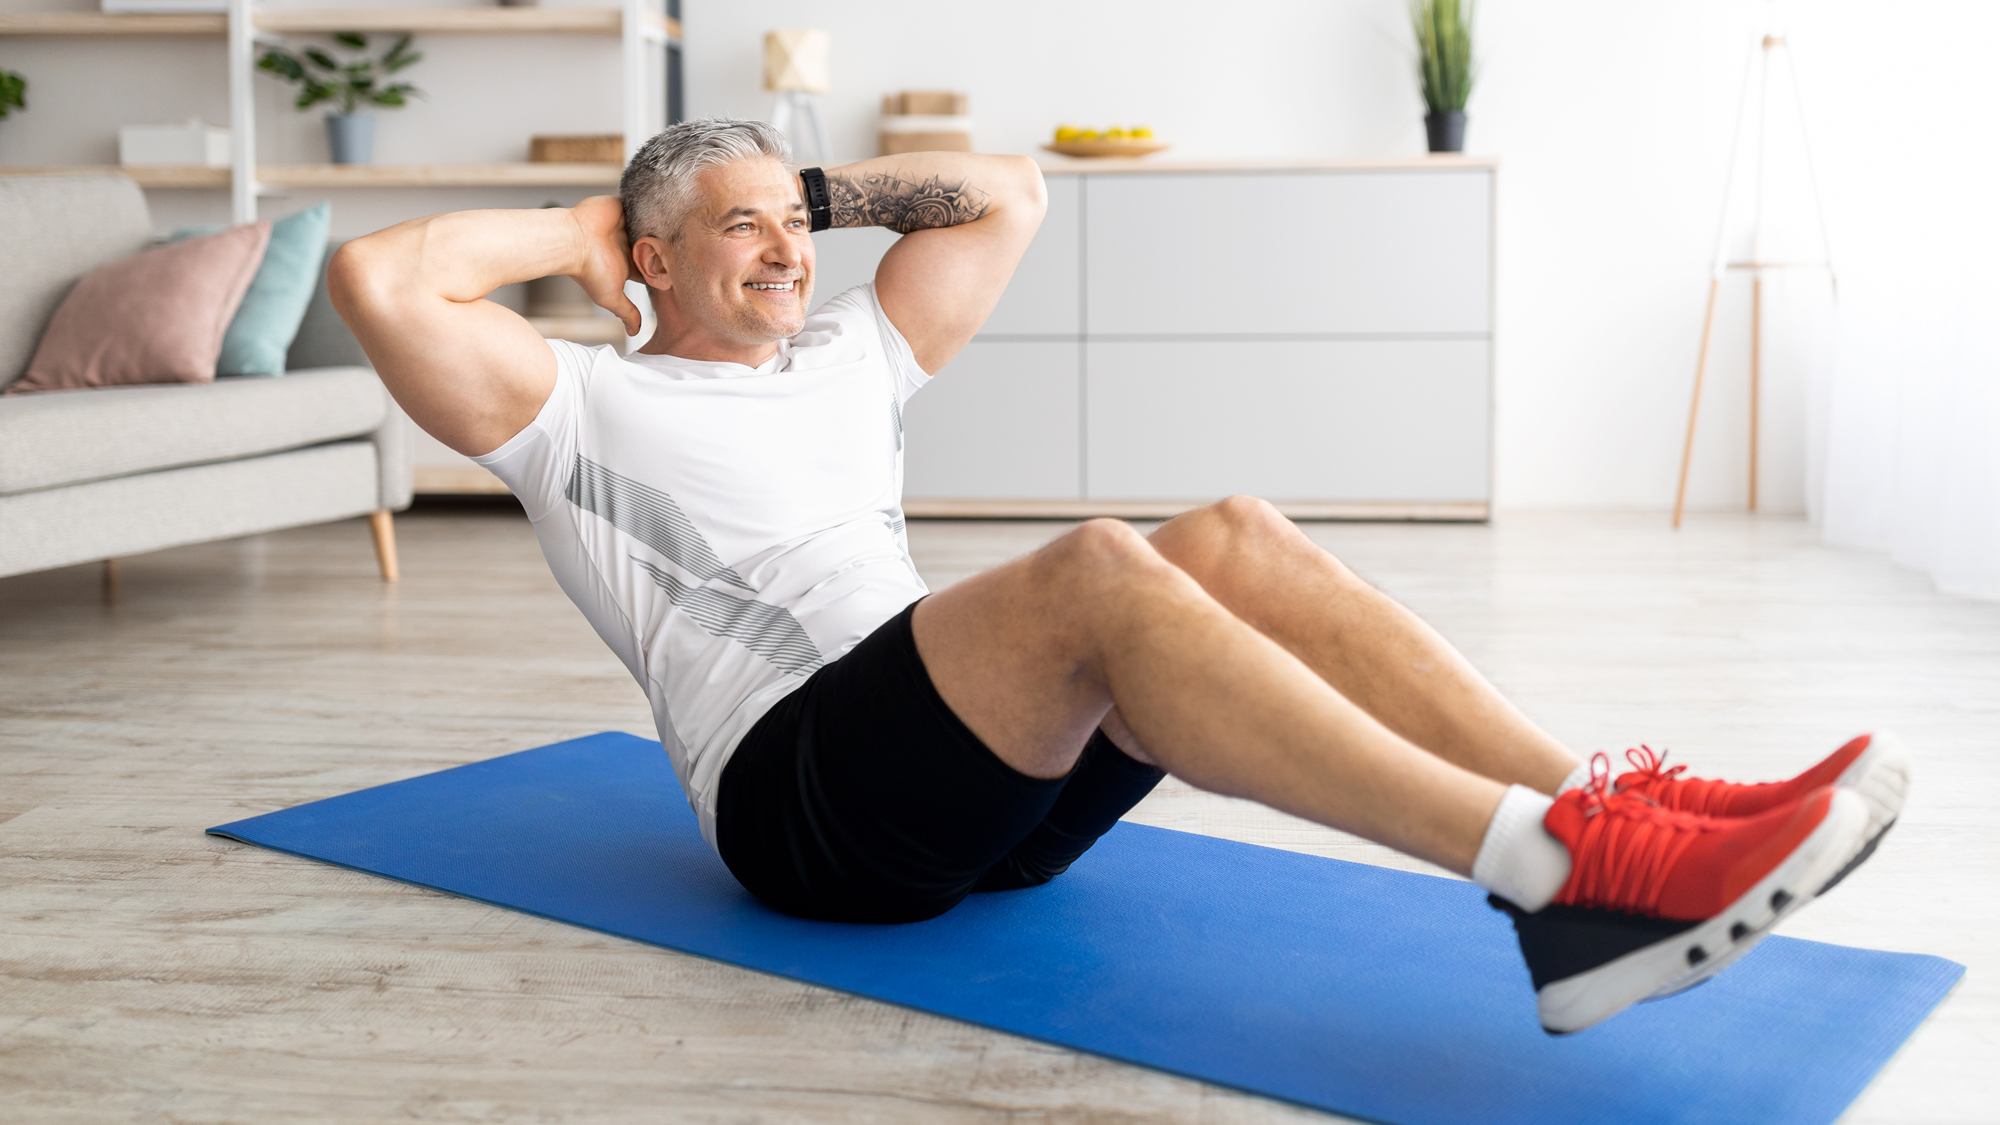 The Body Coach: Joe Wicks's 20-minute HIIT workout plan, Fitness